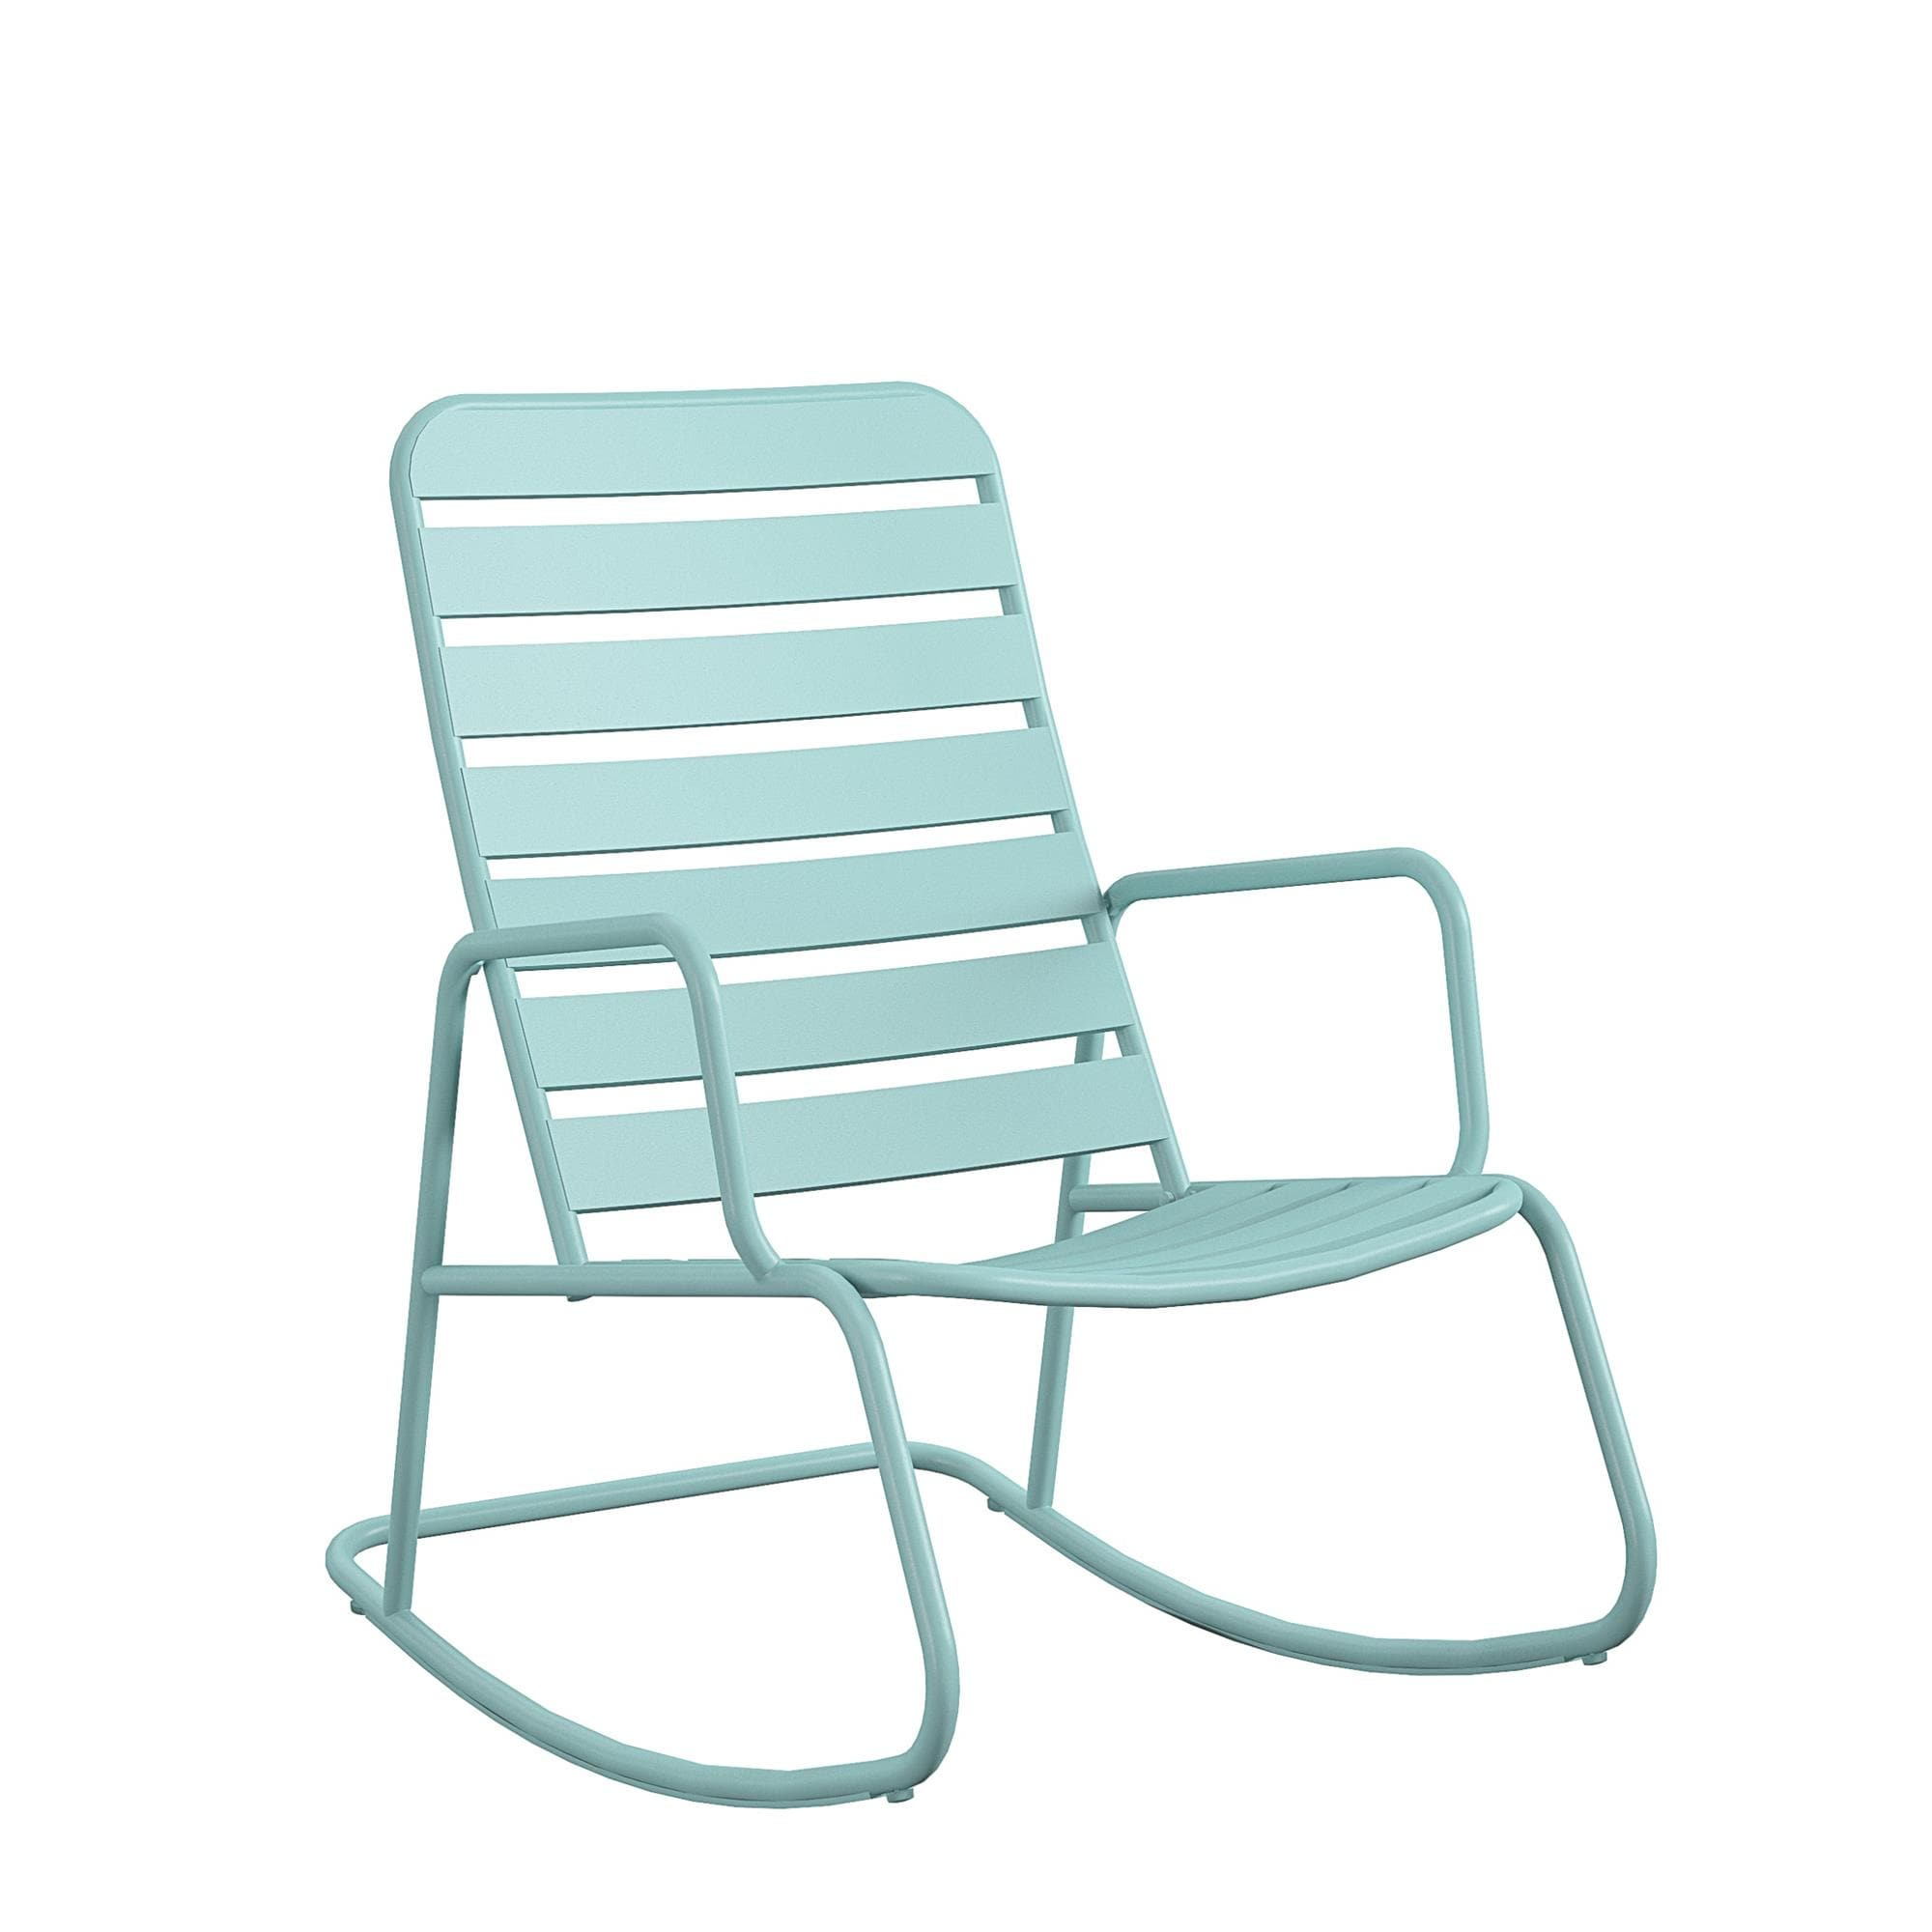 The Novogratz Poolside Collection Roberta Outdoor Rocking Chair